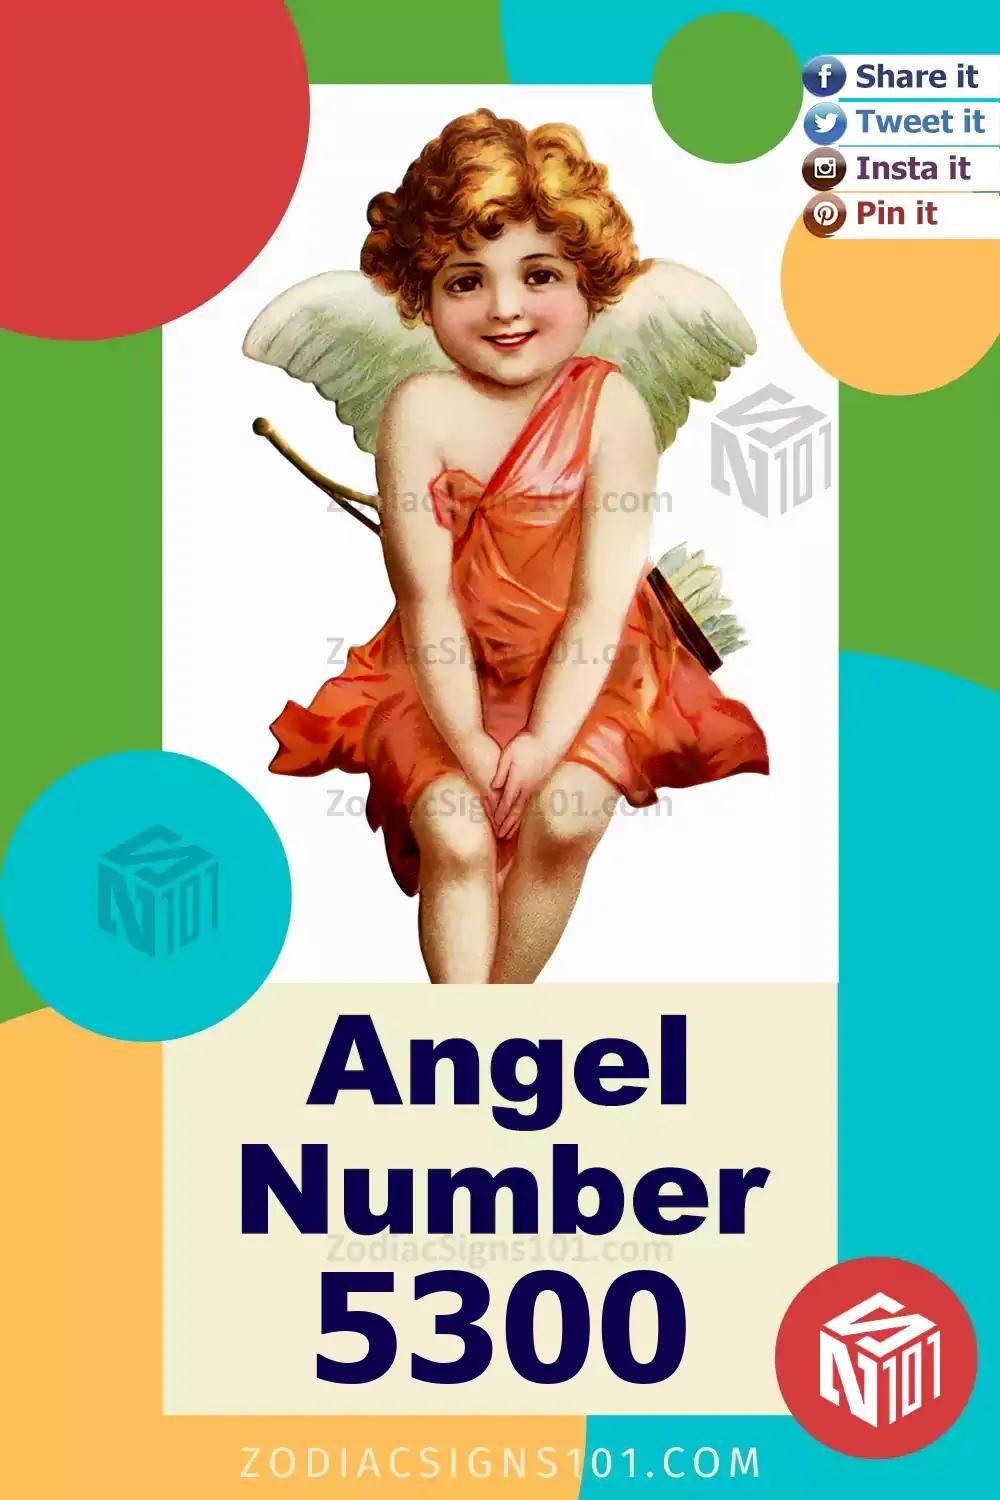 5300-Angel-Number-Meaning.jpg